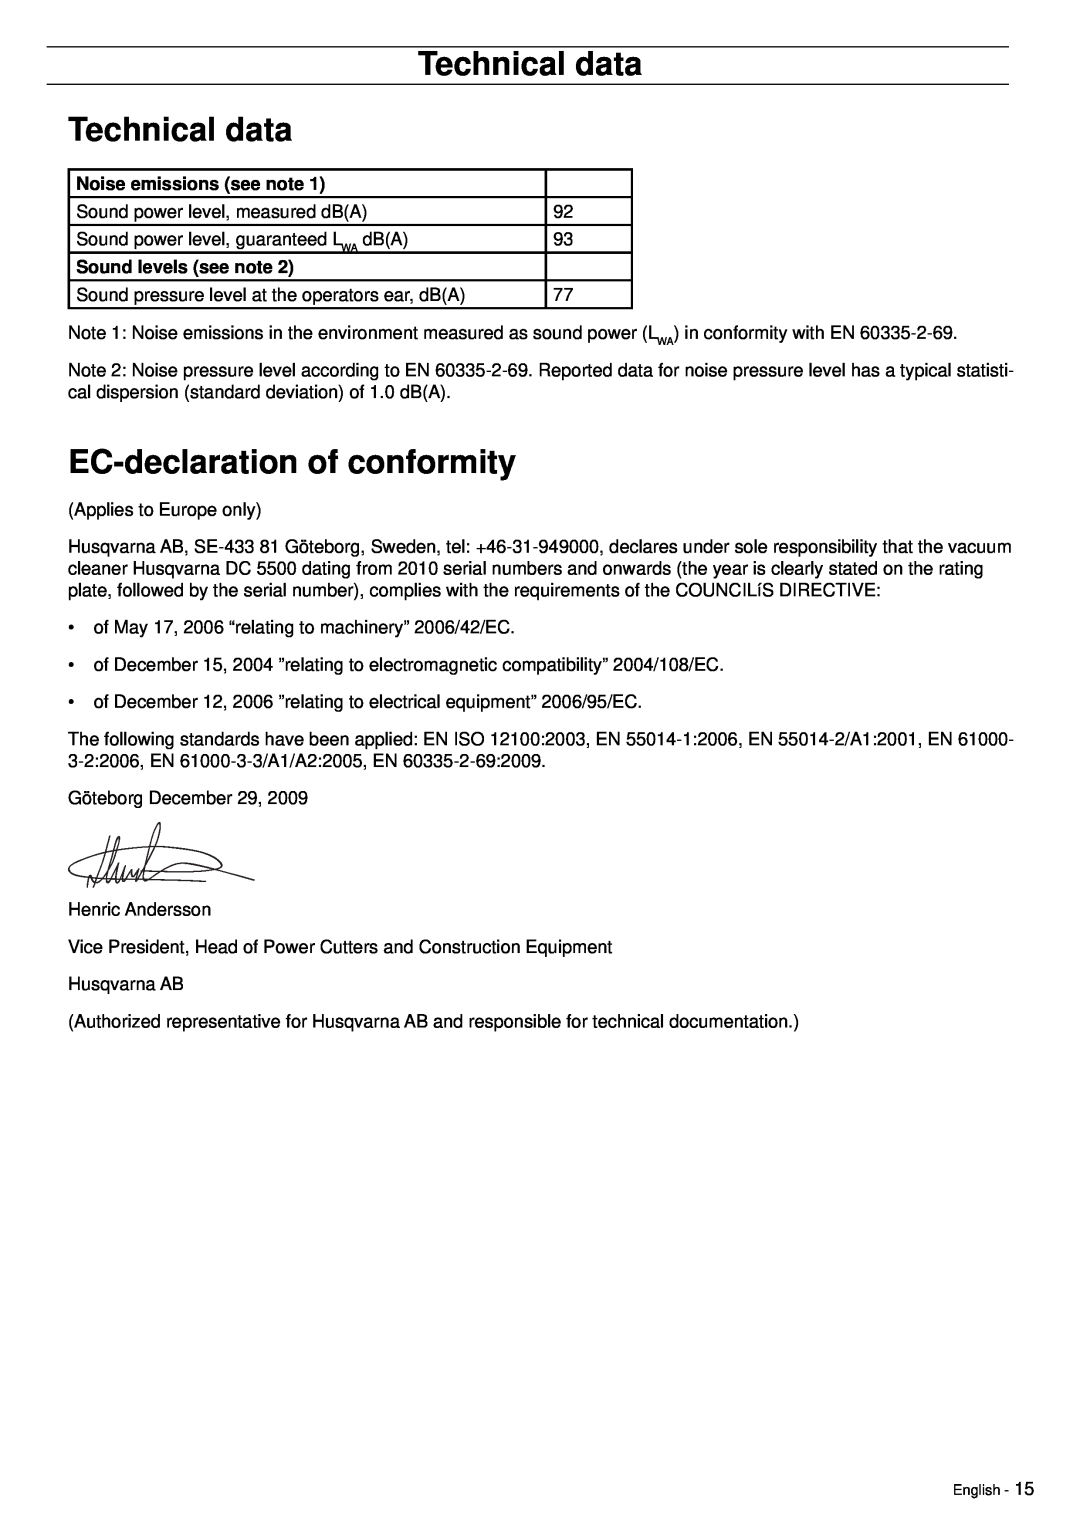 Husqvarna DC5500 manuel dutilisation Technical data Technical data, EC-declarationof conformity, Noise emissions see note 